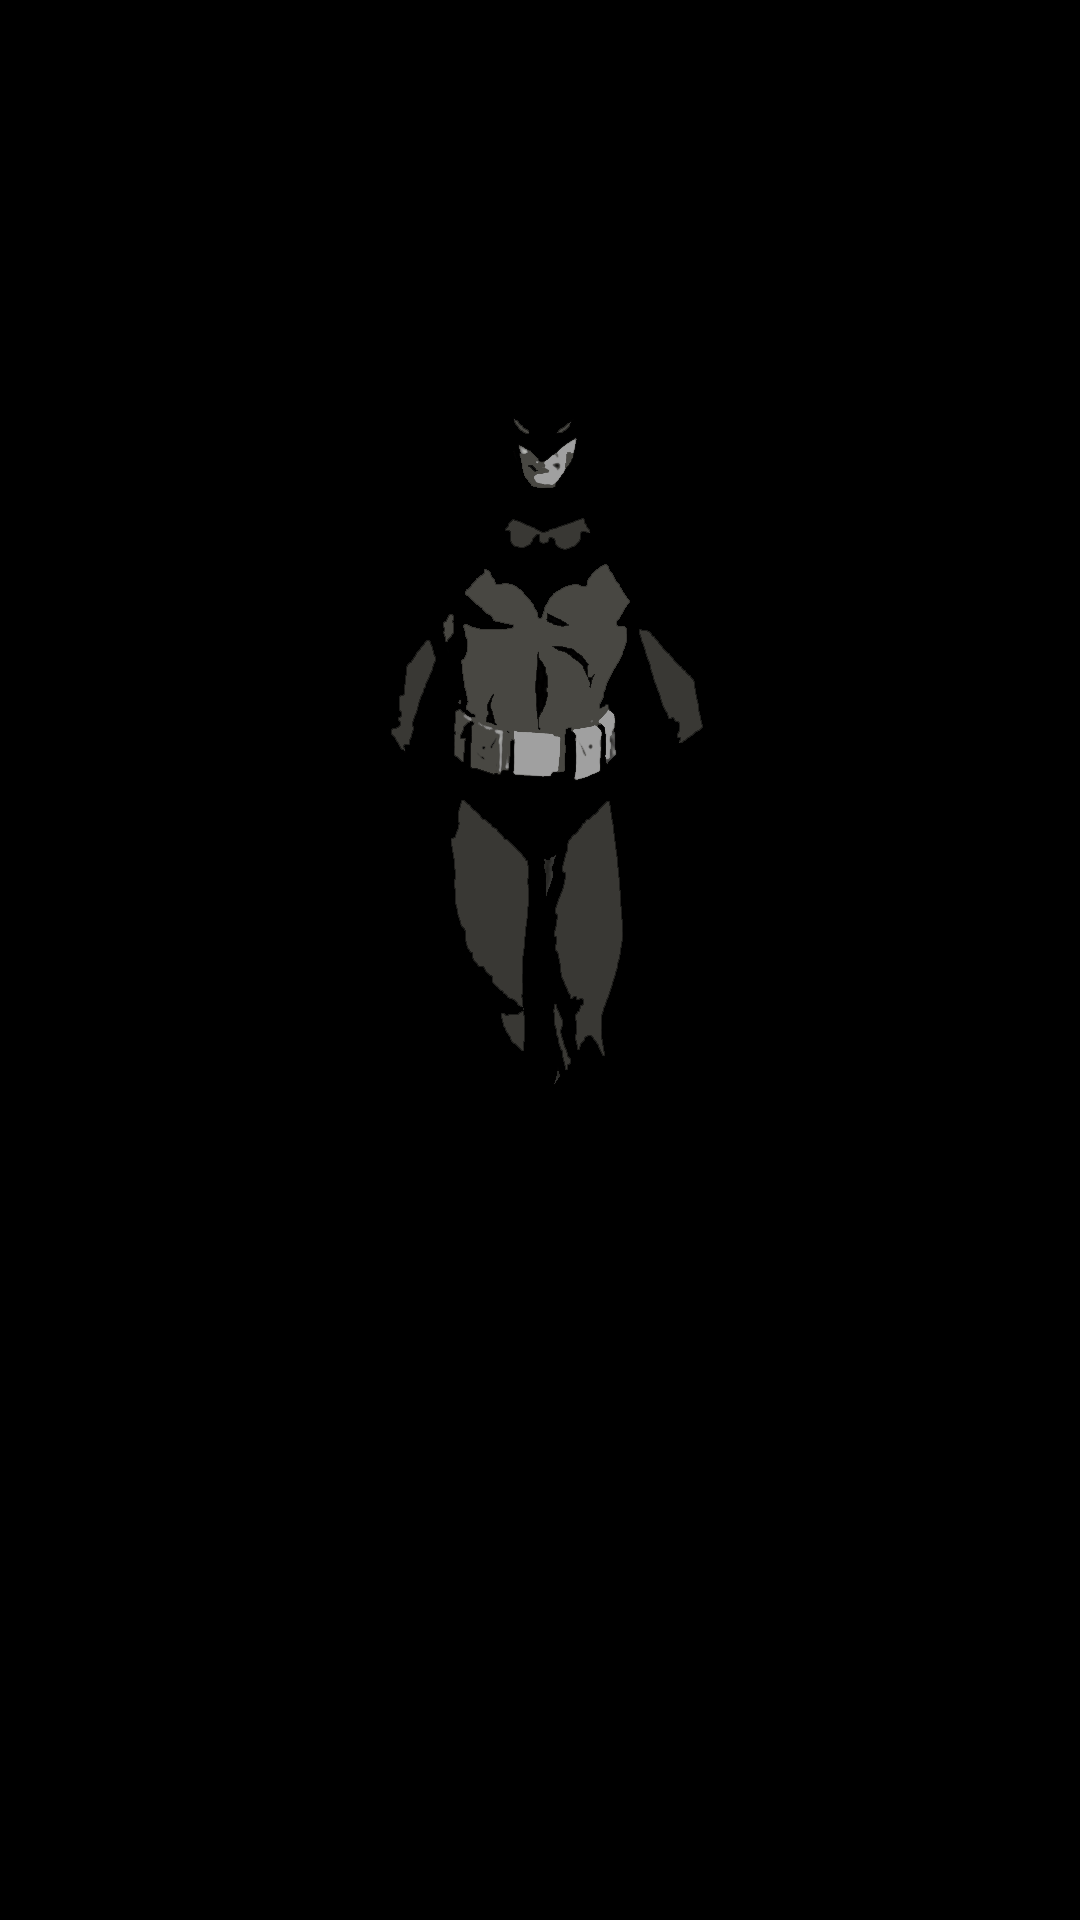 The Batman wallpaper (by dannyaer) [1954x4236] : r/Amoledbackgrounds